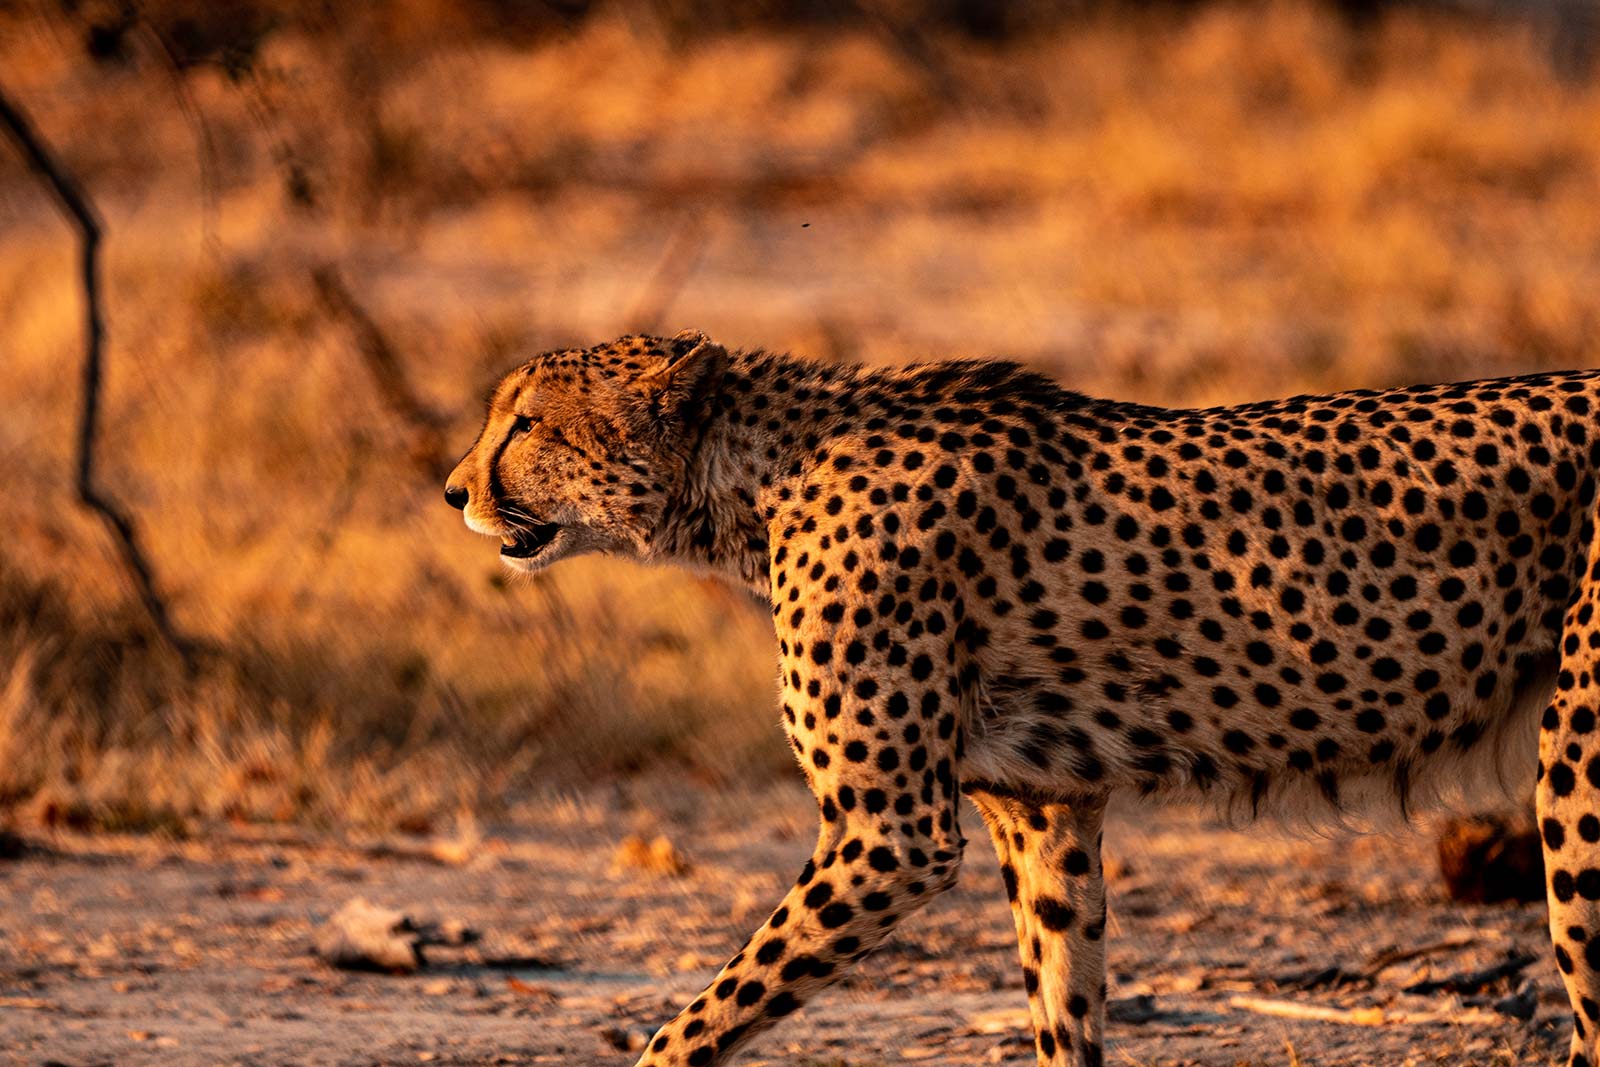 Cheetah in Botswana. Losing my first ever travel journal